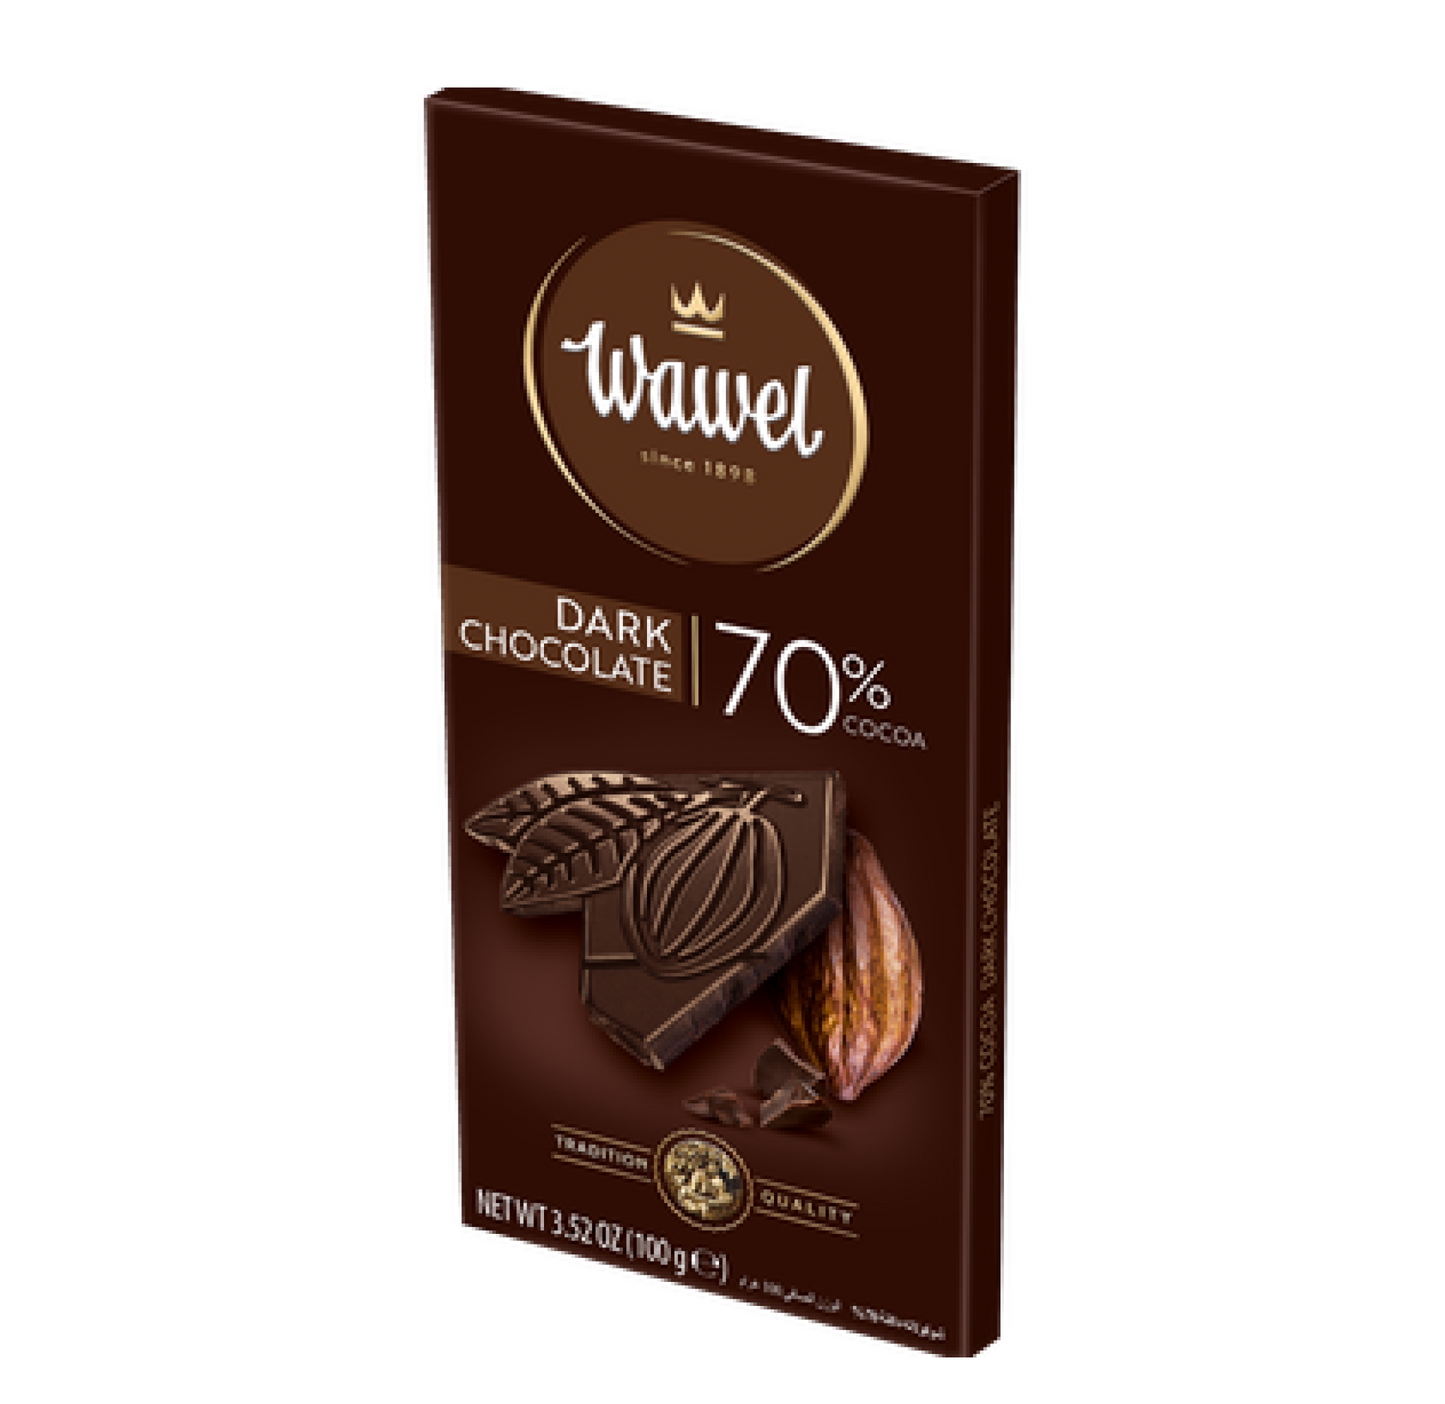 Wawel Dark Chocolate 70% 100g